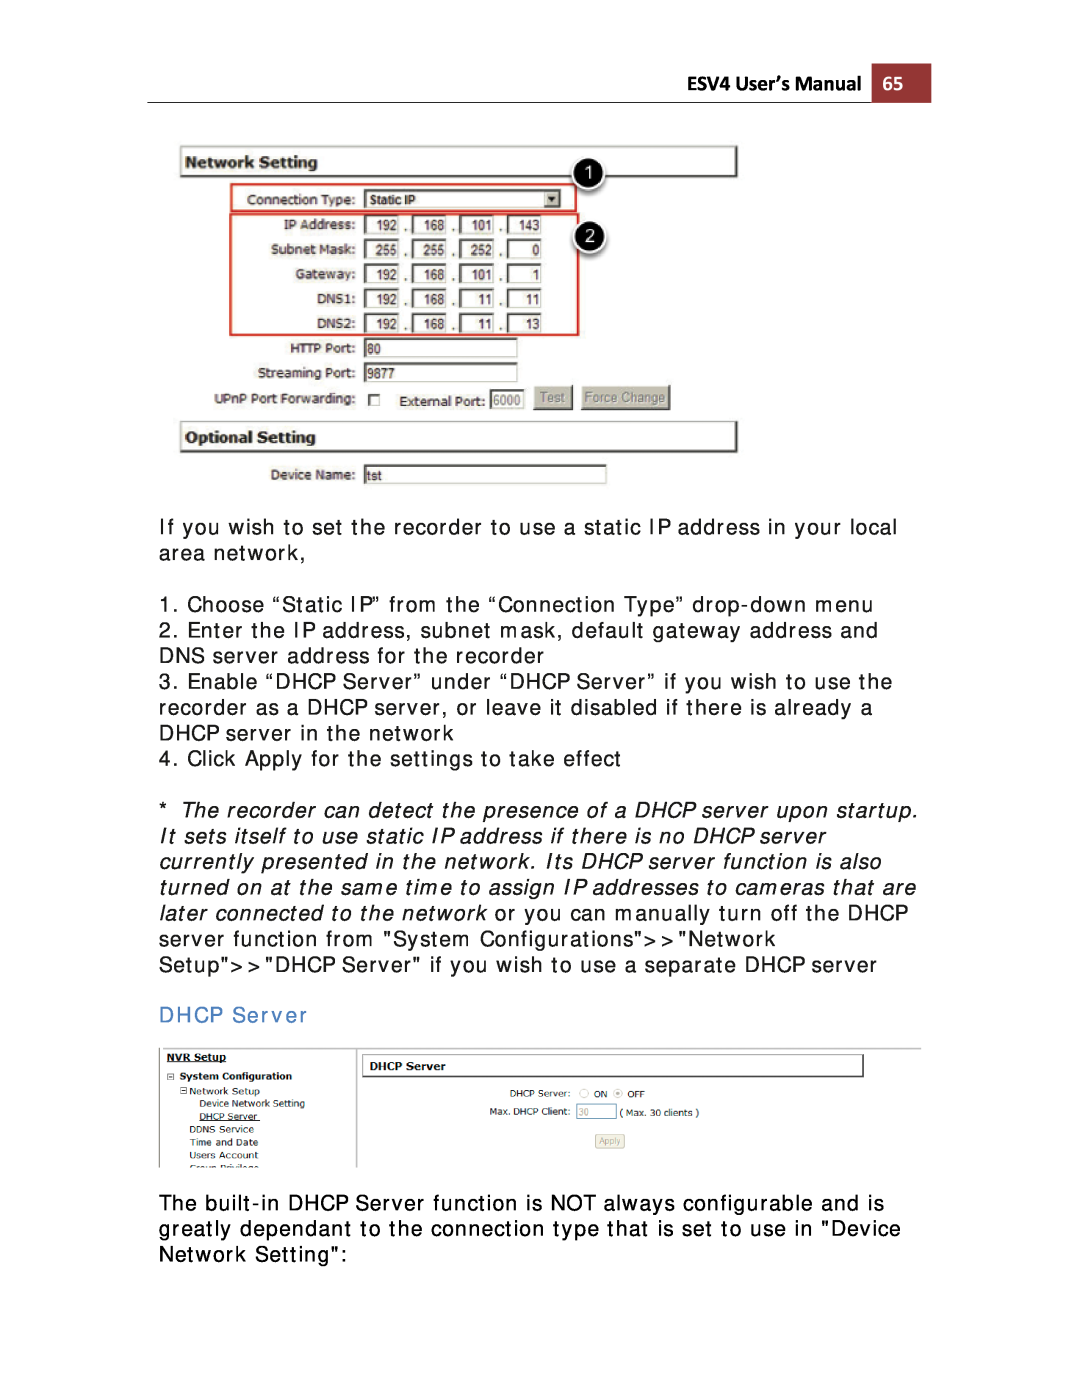 Toshiba ESV41T user manual DHCP Server, ESV4 User’s Manual 